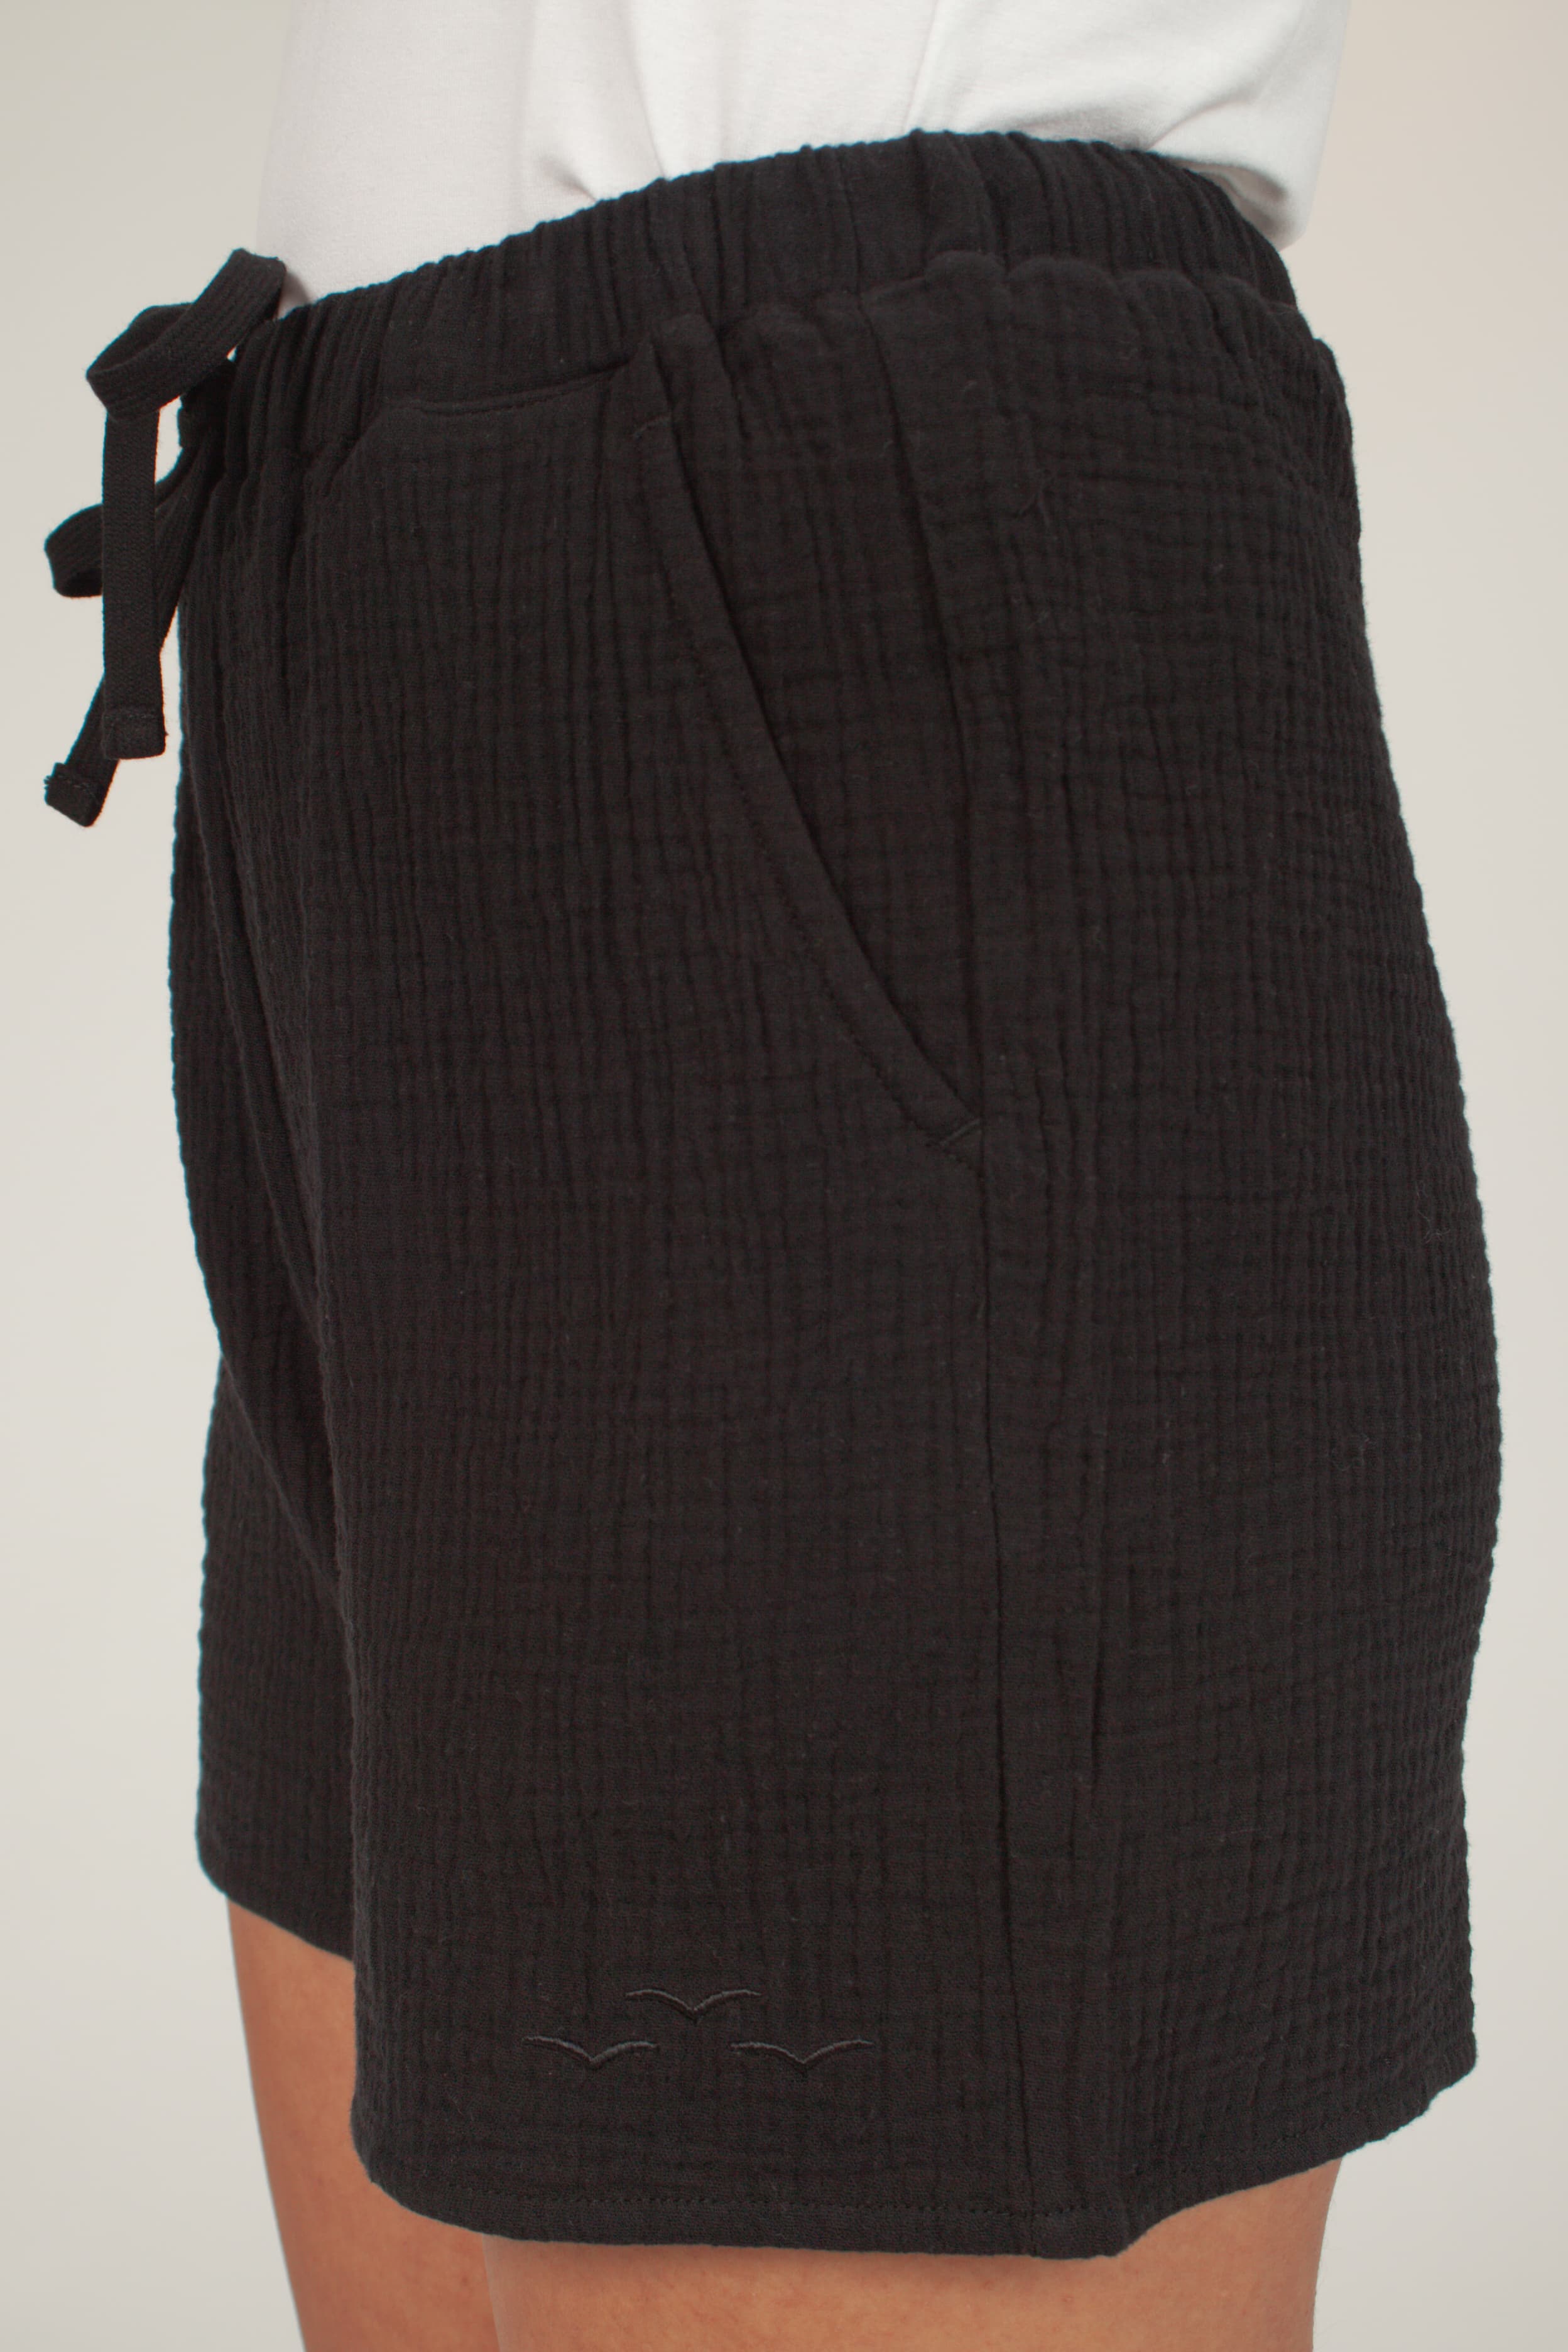 Lightweight Cotton Gauze shorts in black